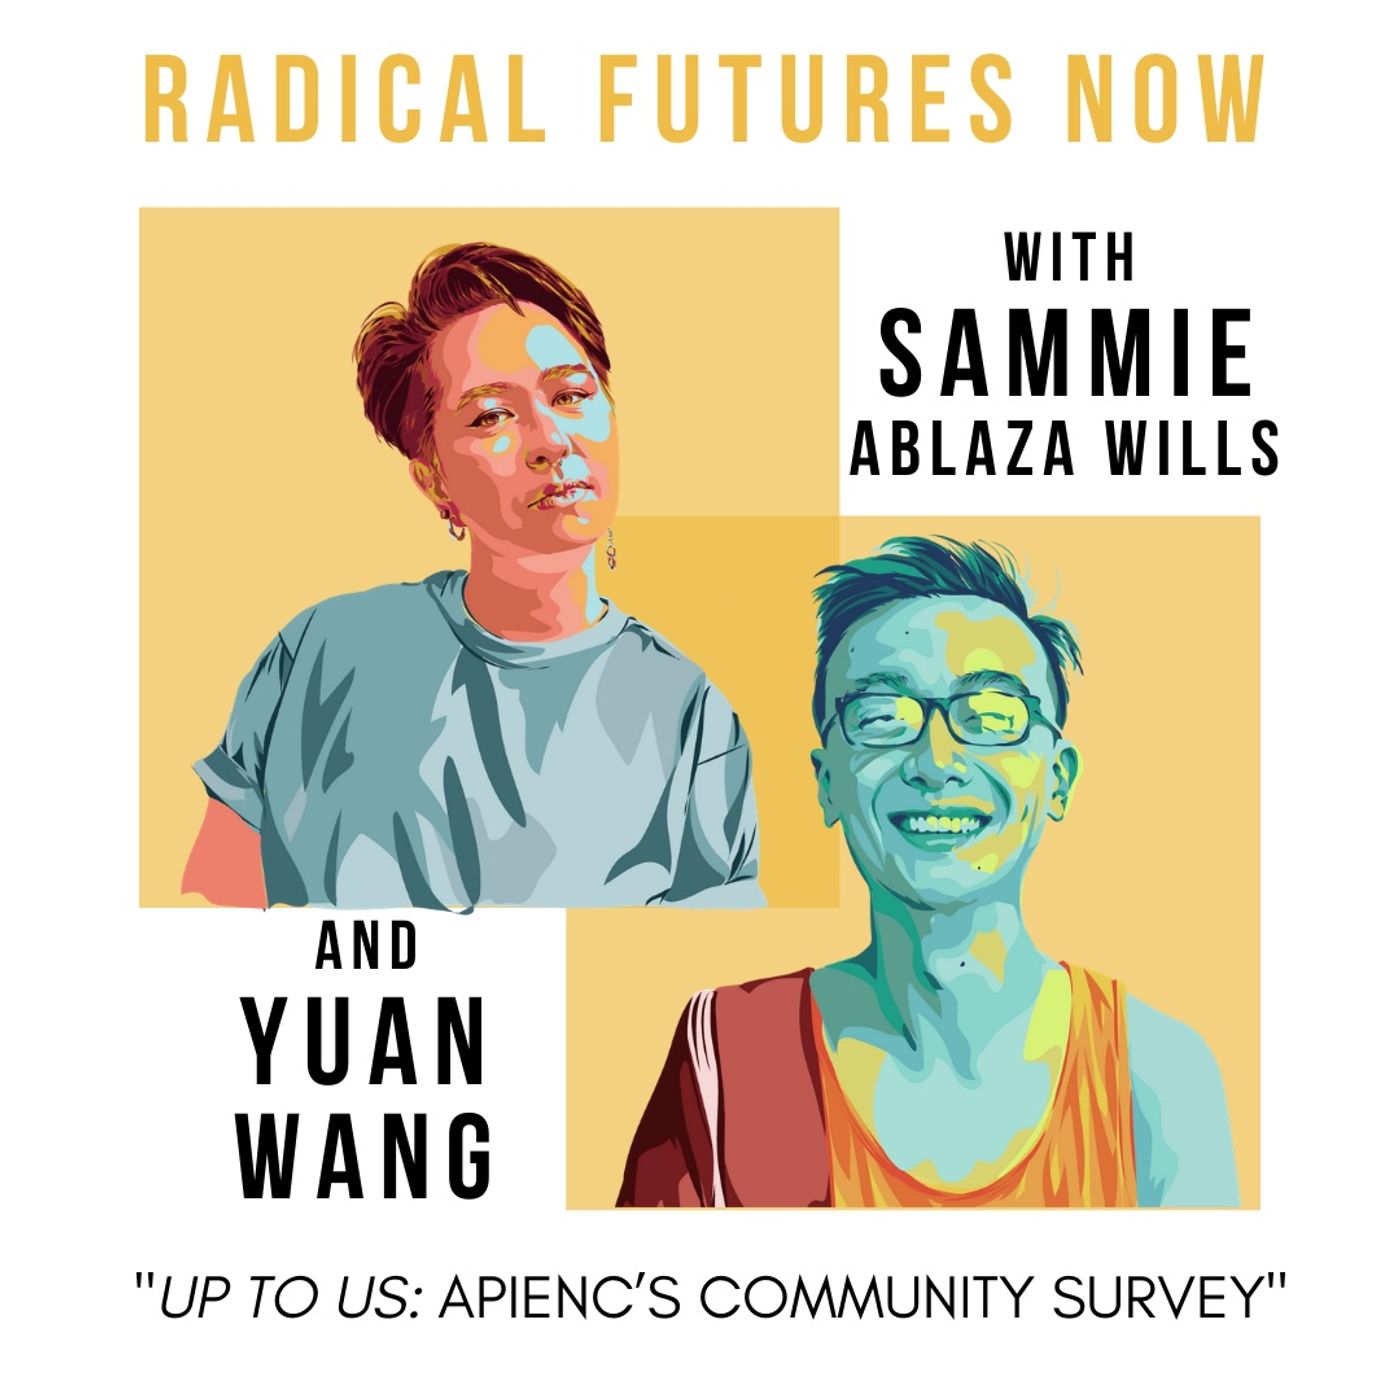 Up To Us: APIENC’s Community Survey with Samie & Yuan